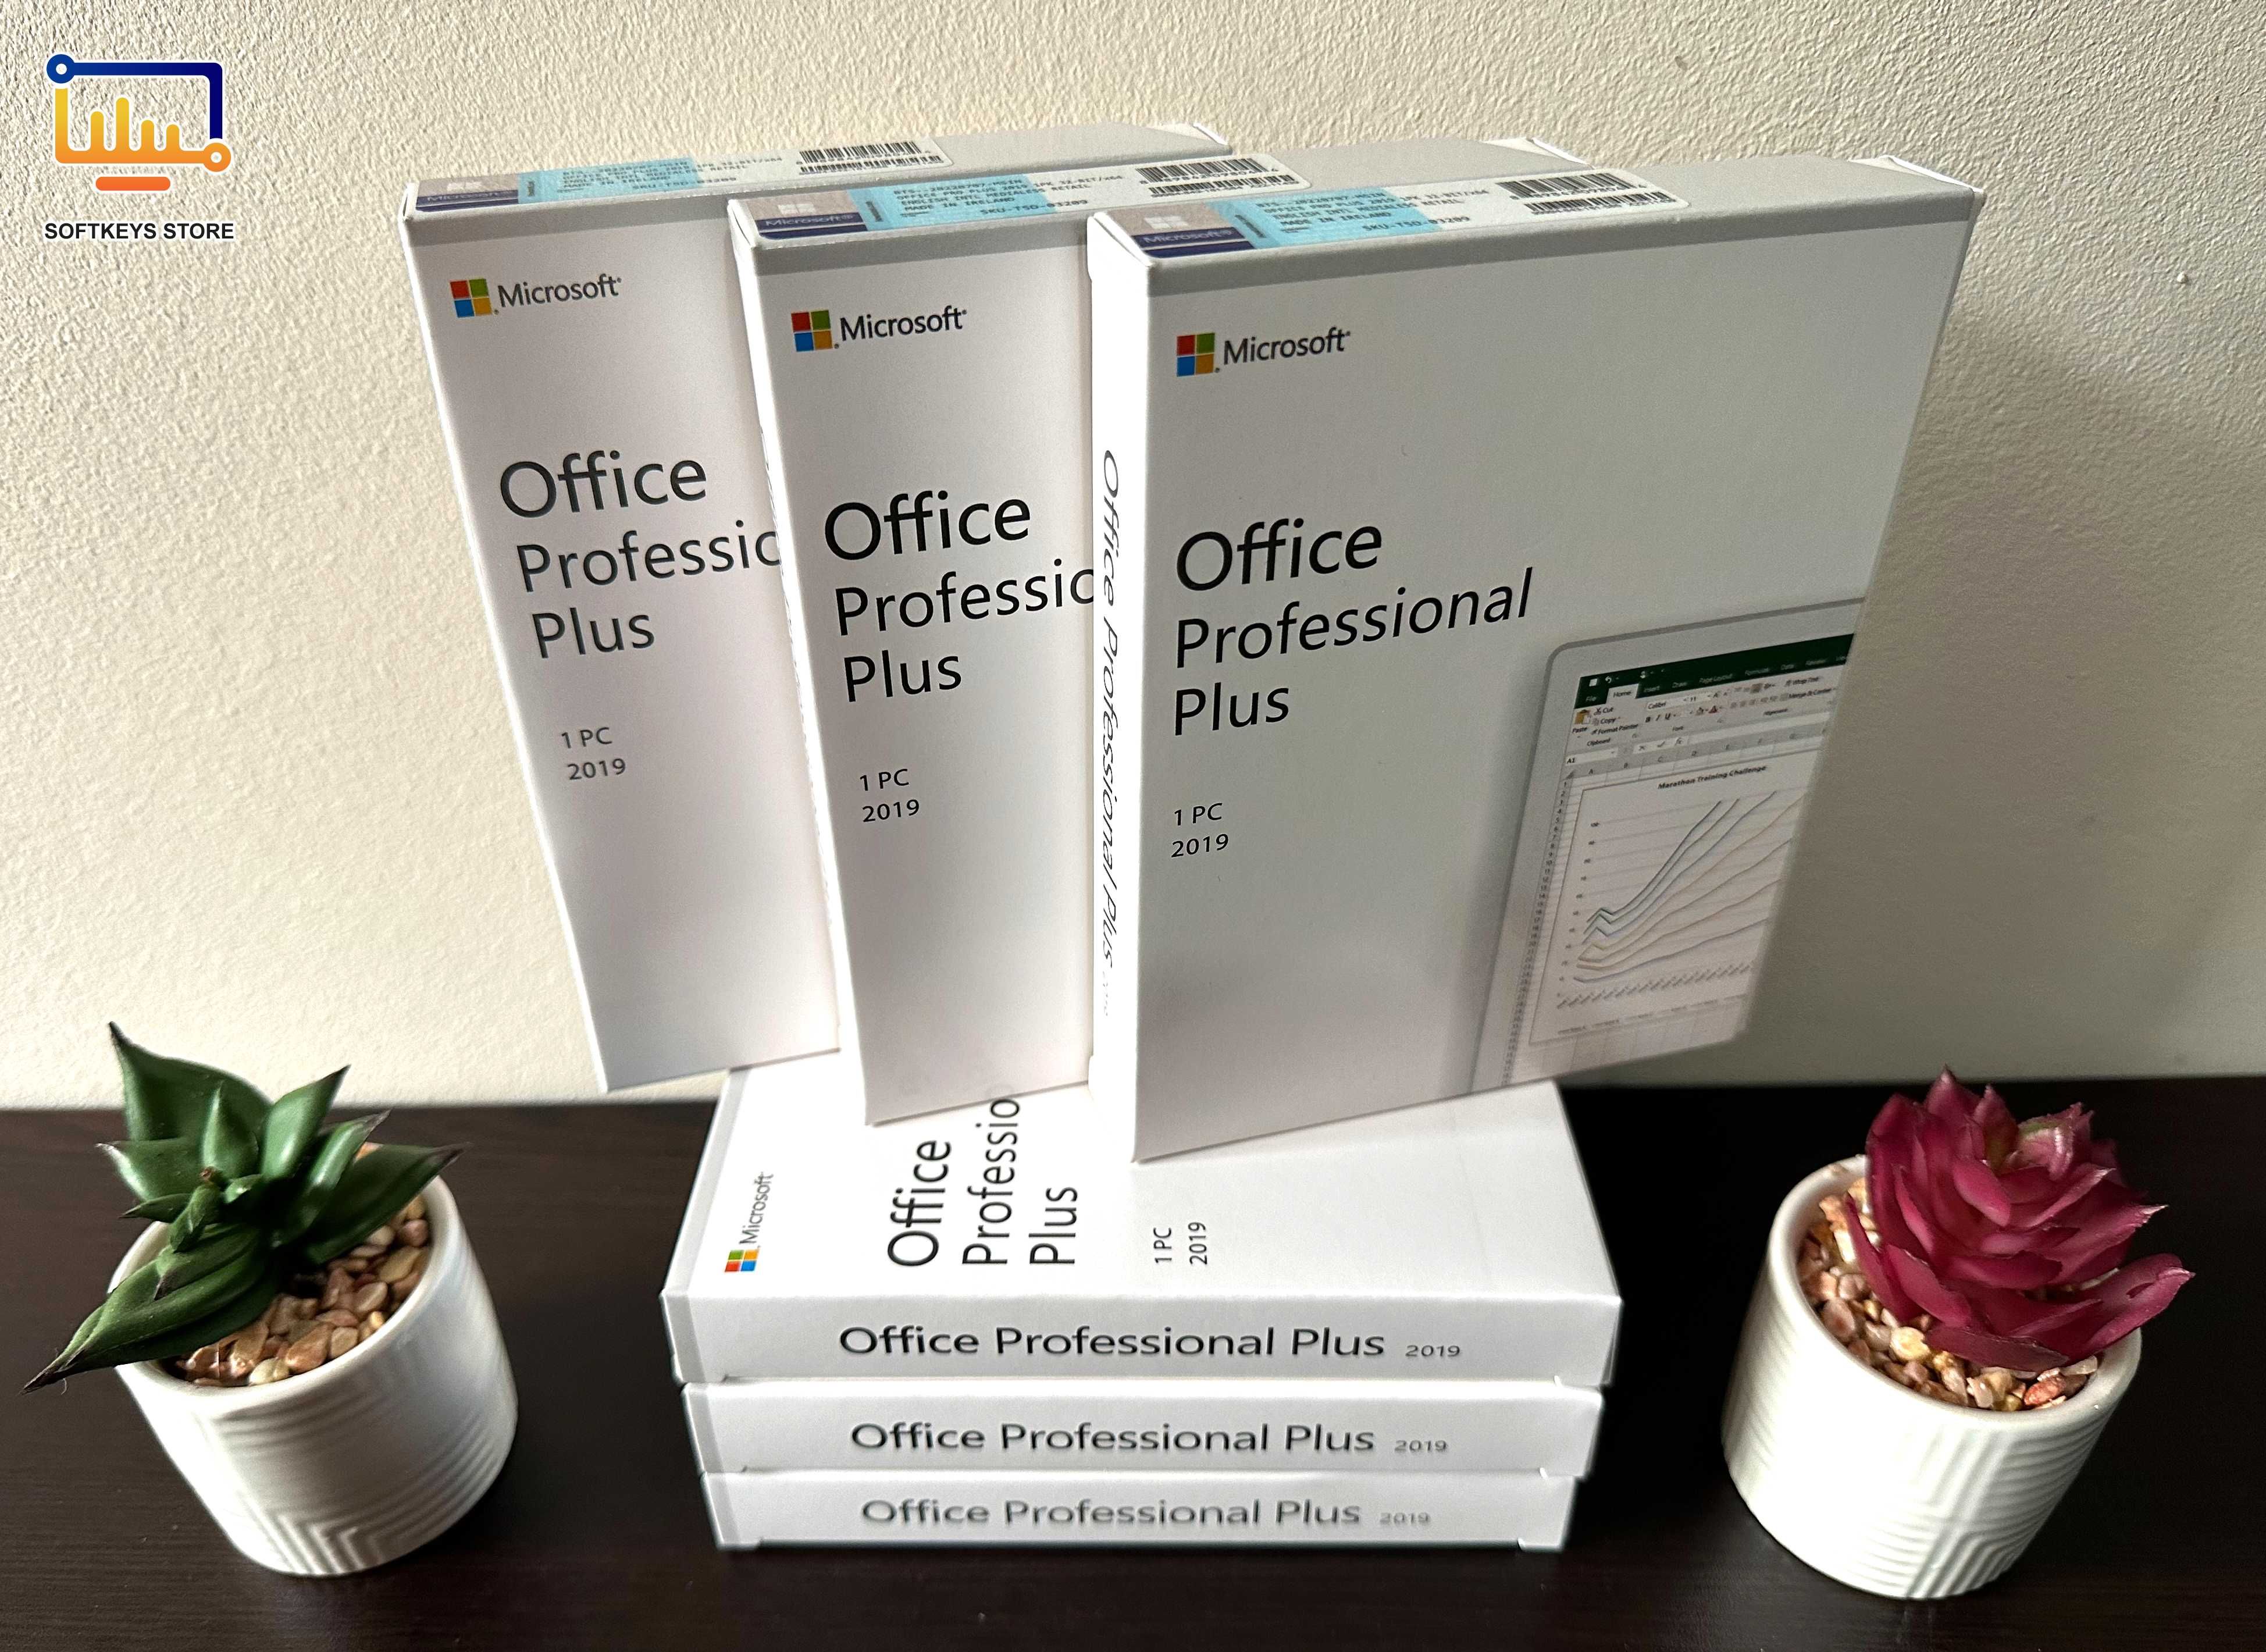 Microsoft Office 2019 Professional Plus (RETAIL Box)